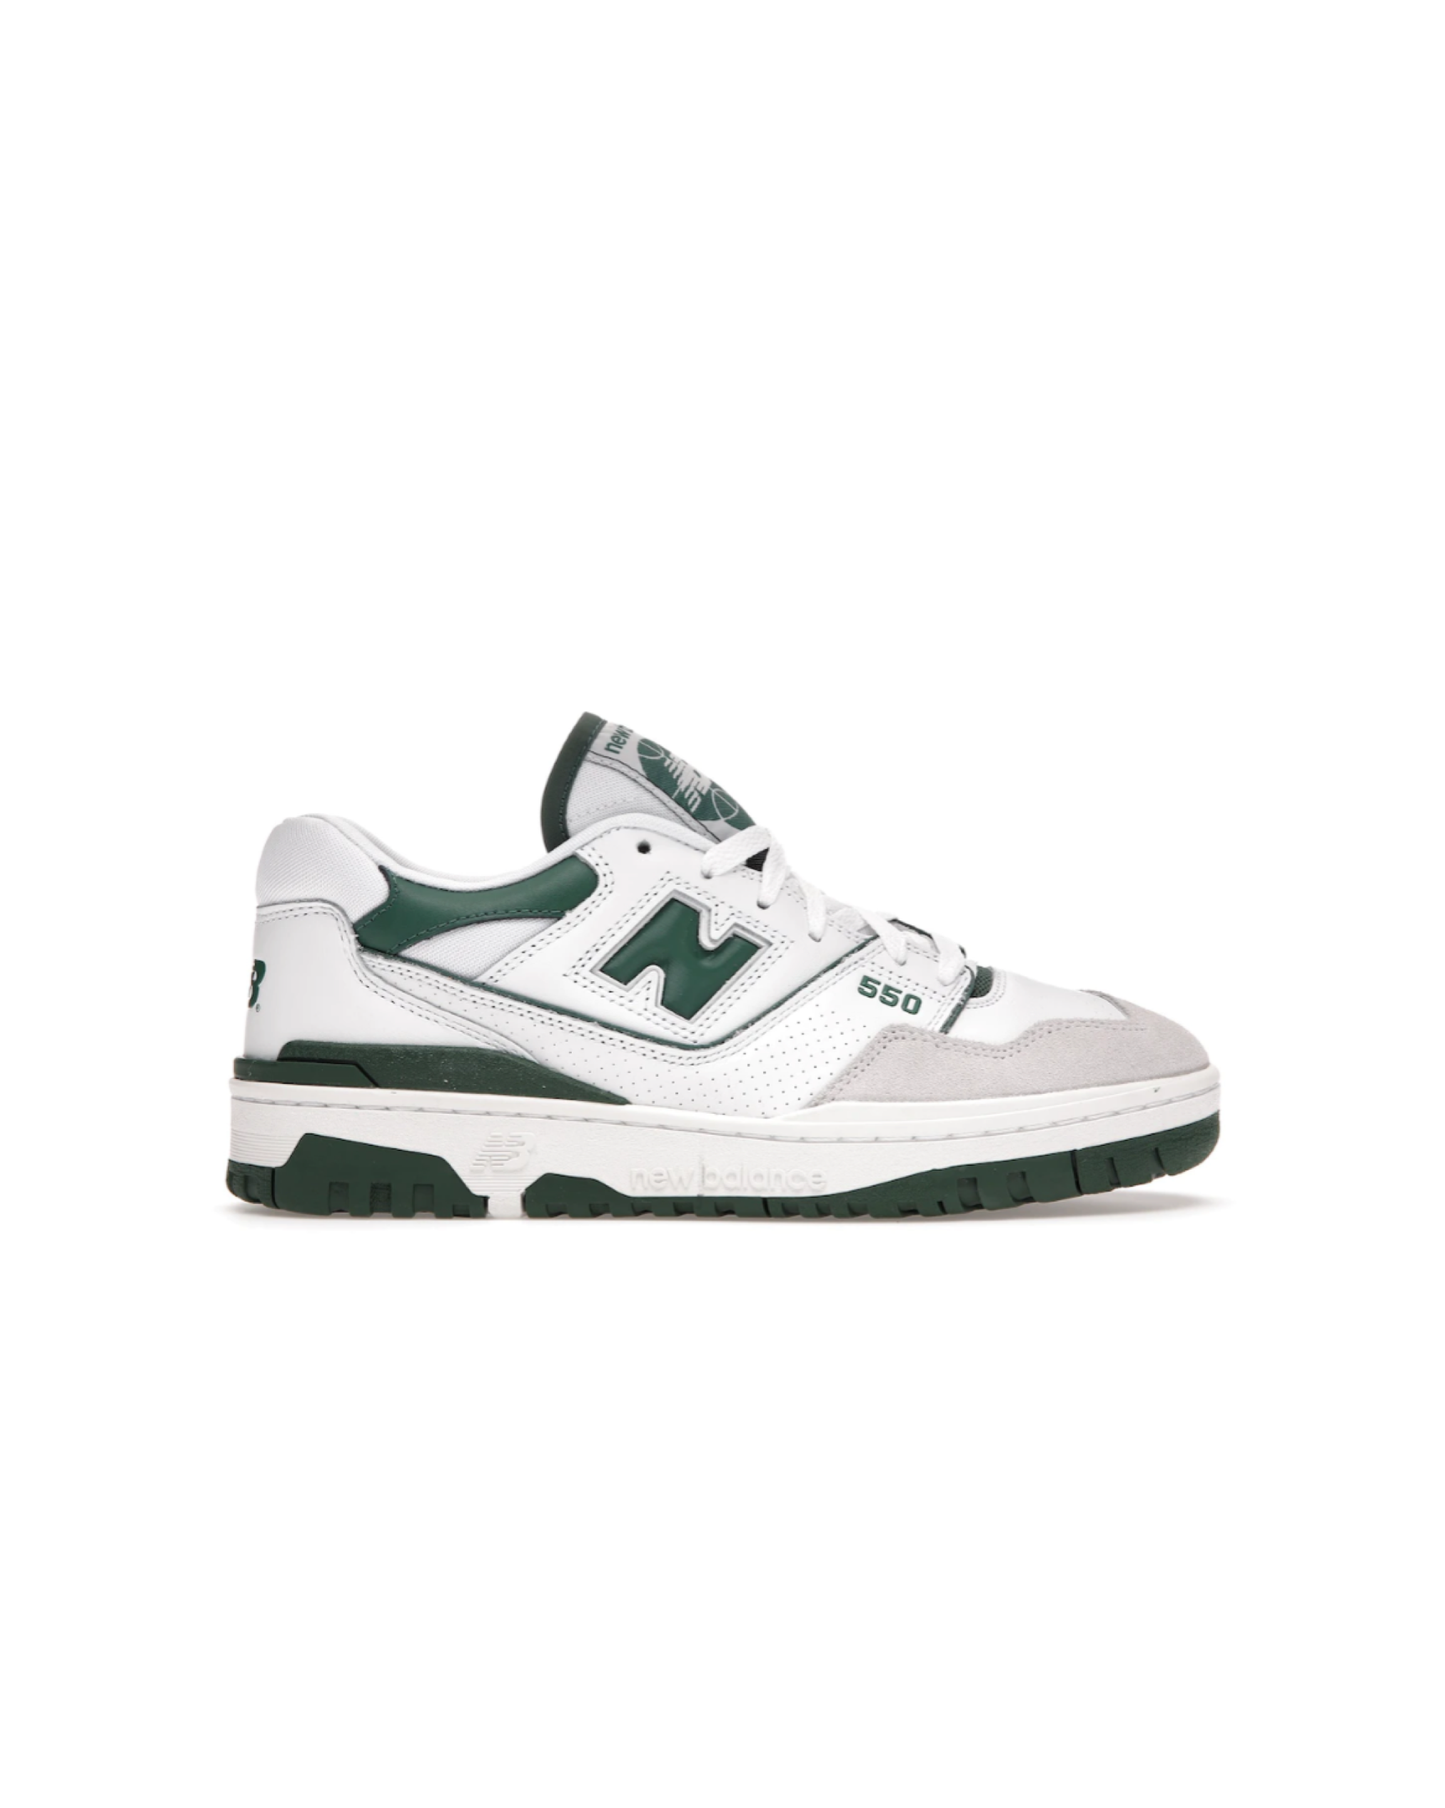 NB 550 “white green”